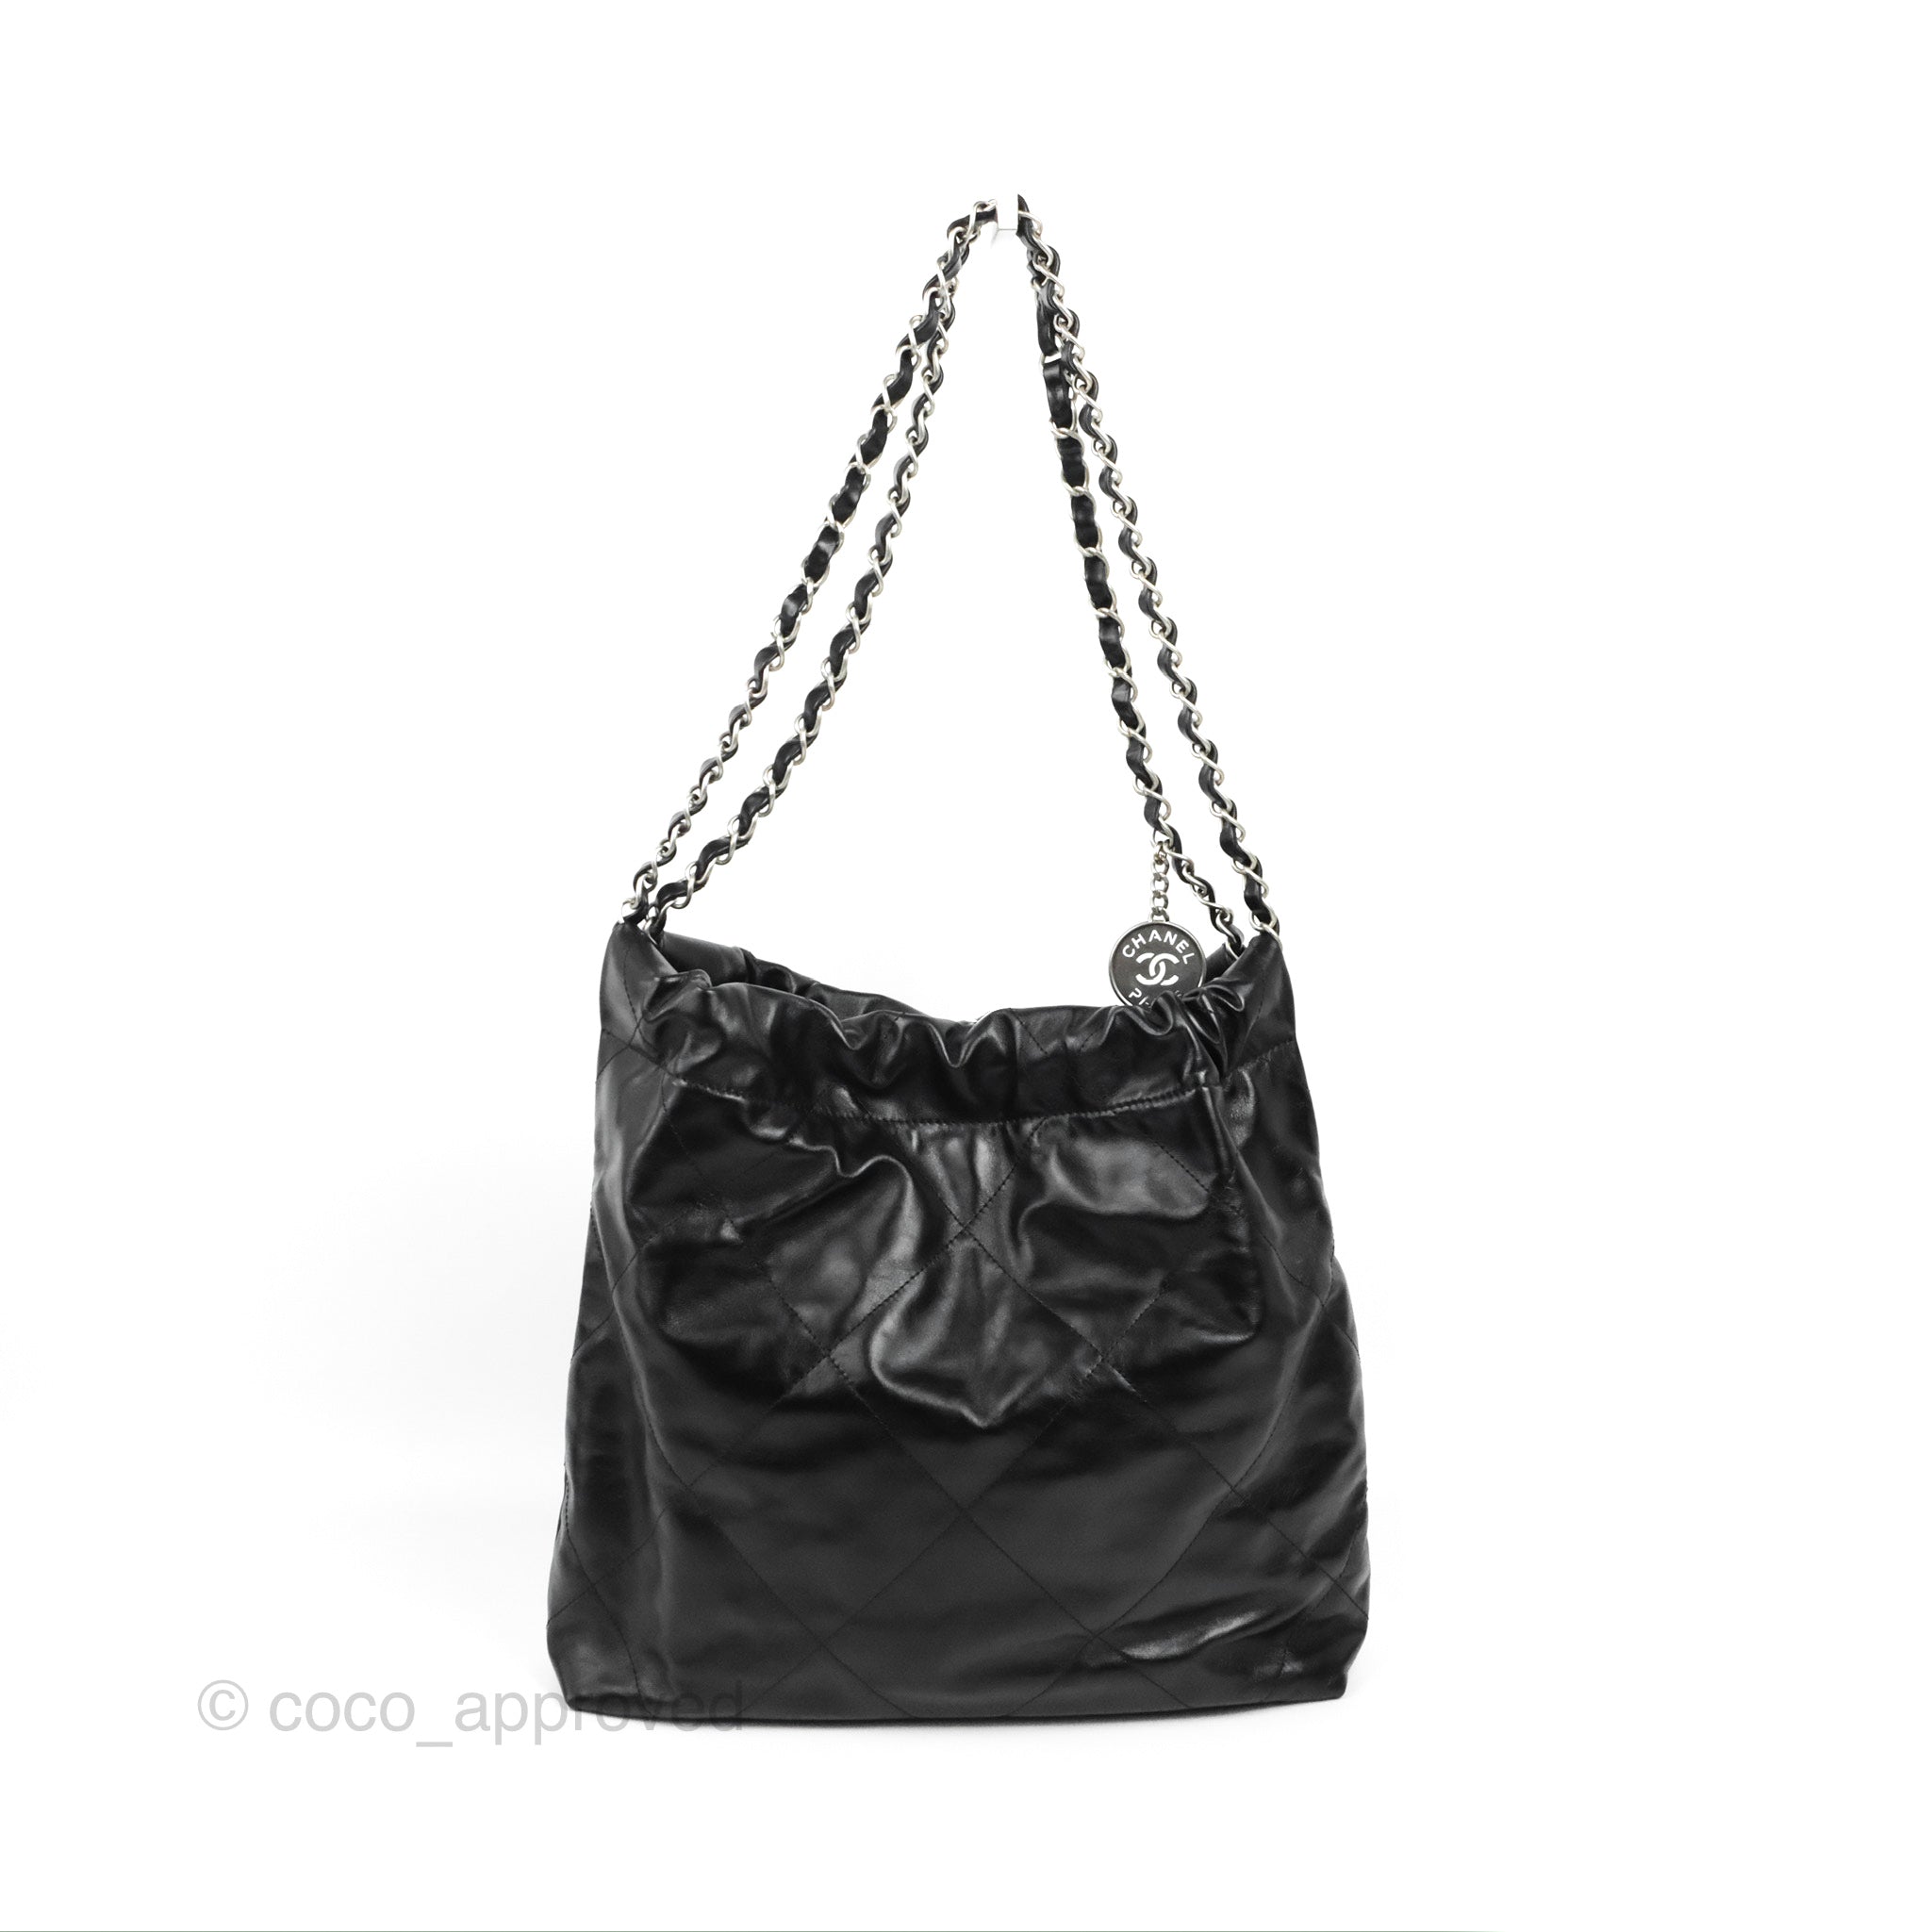 Chanel 19 Handbag Black Lambskin in Lambskin with Gold/Silver